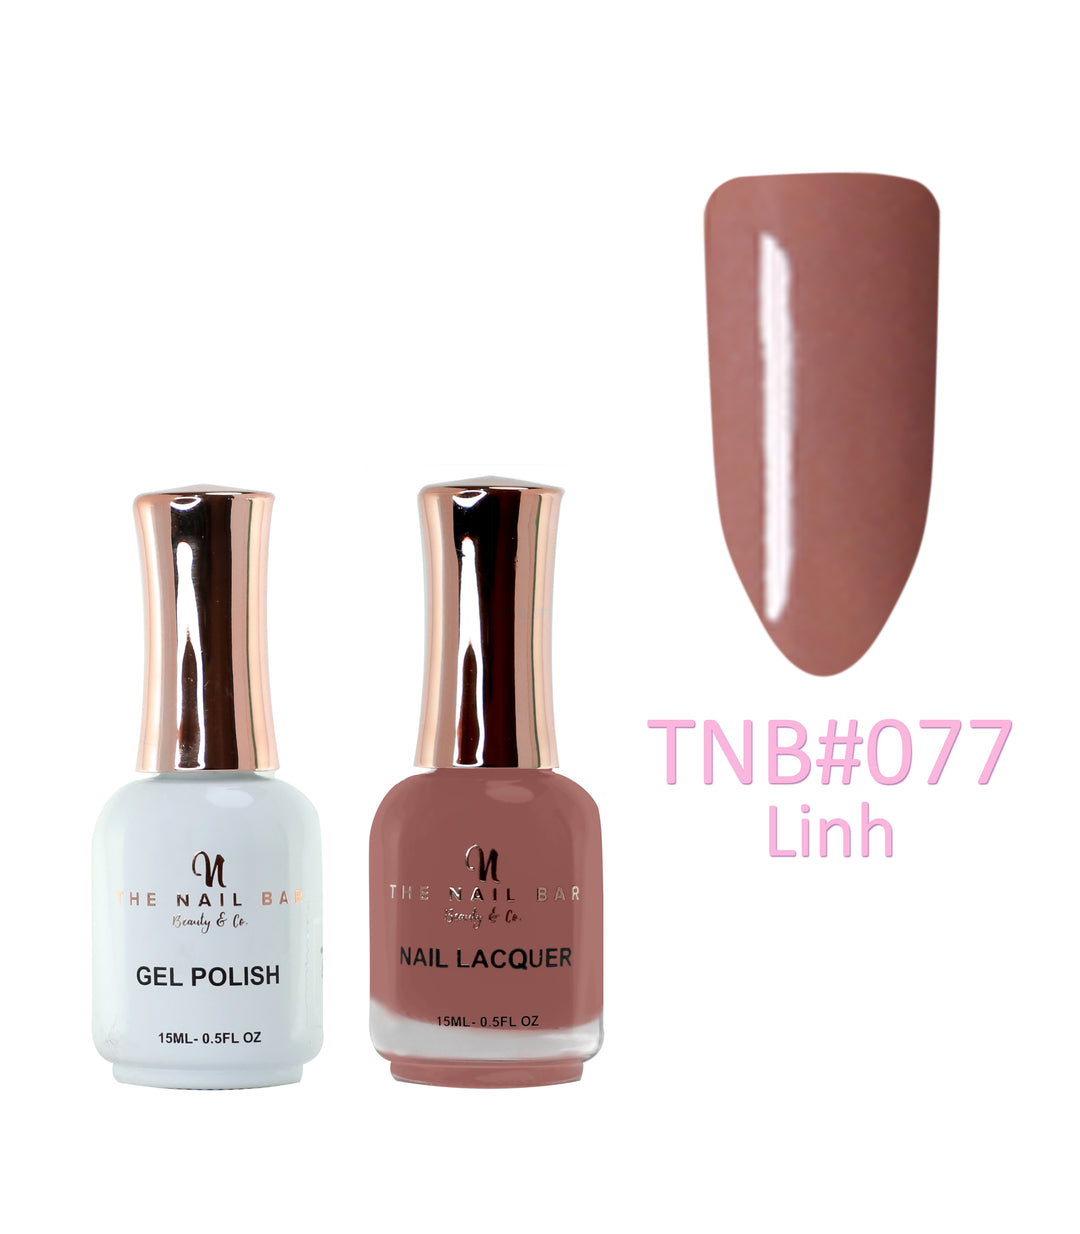 Dual Polish/Gel colour matching (15ml) - Linh - The Nail Bar Beauty & Co.